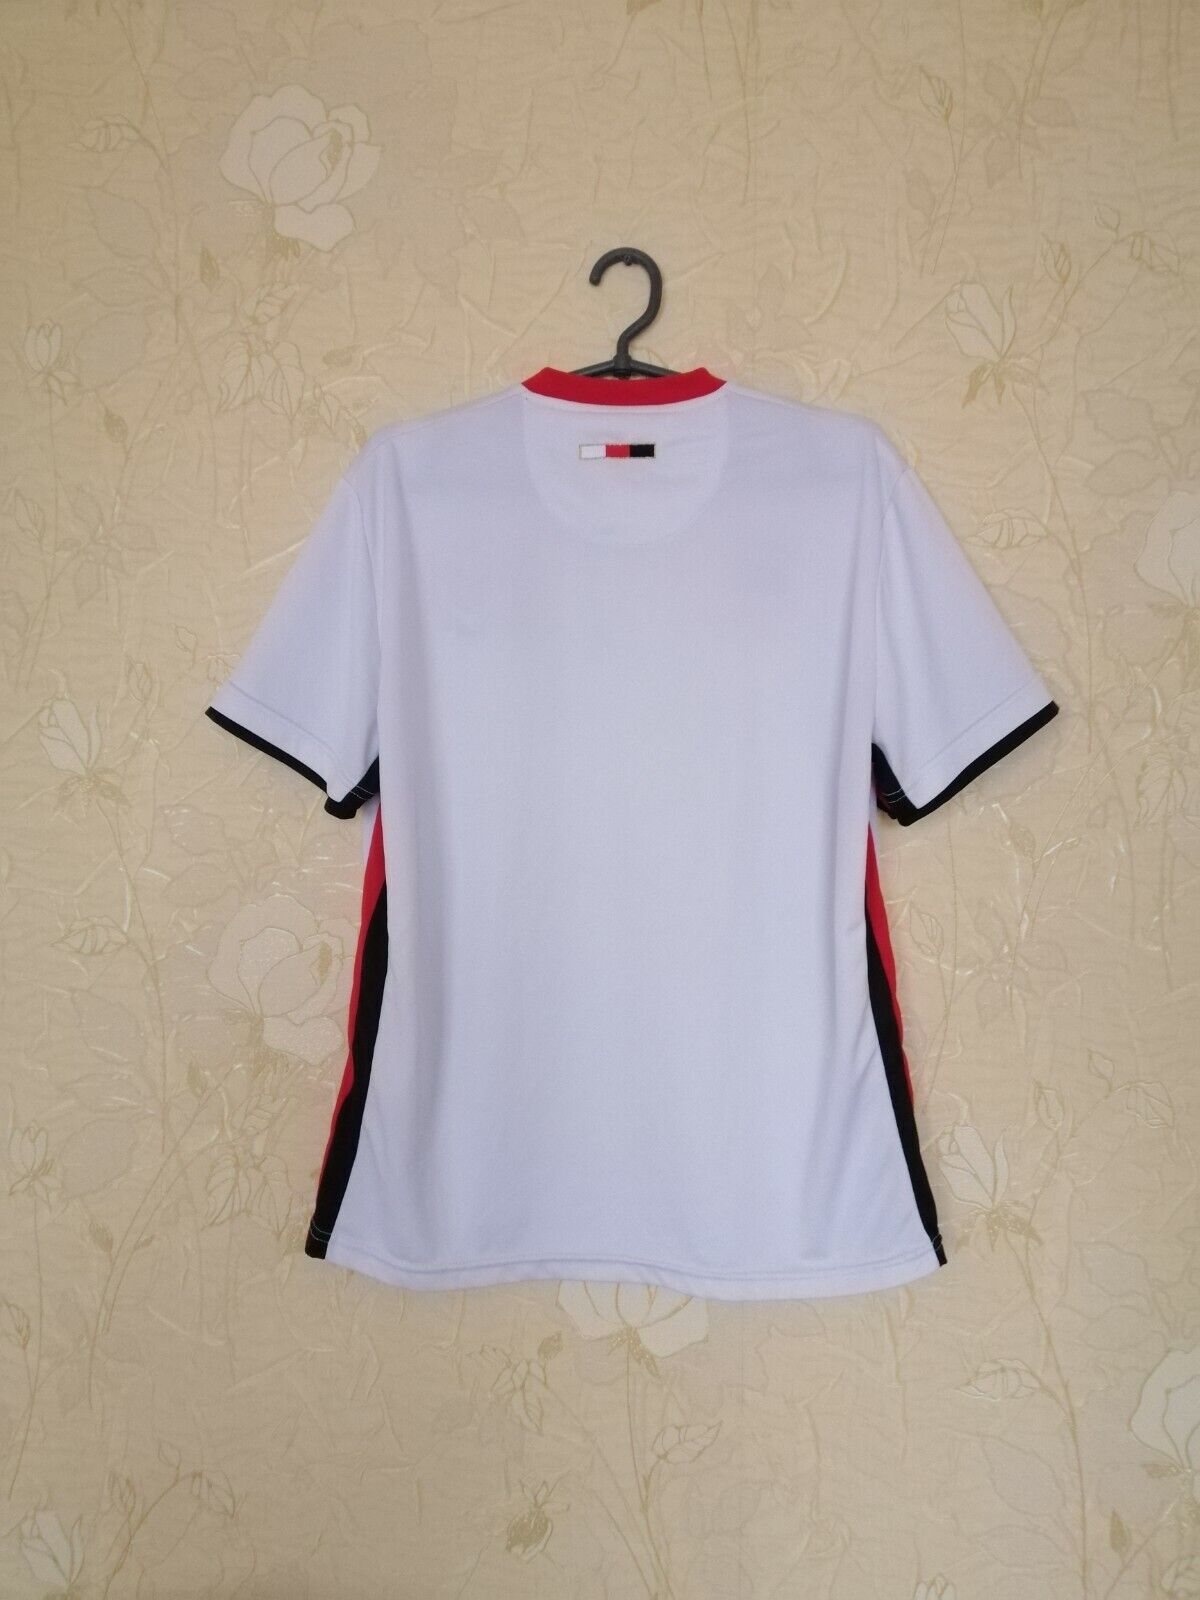 Milton Keynes Dons (MK DONS) 2015 - 2016 home football shirt jersey Errea  size M